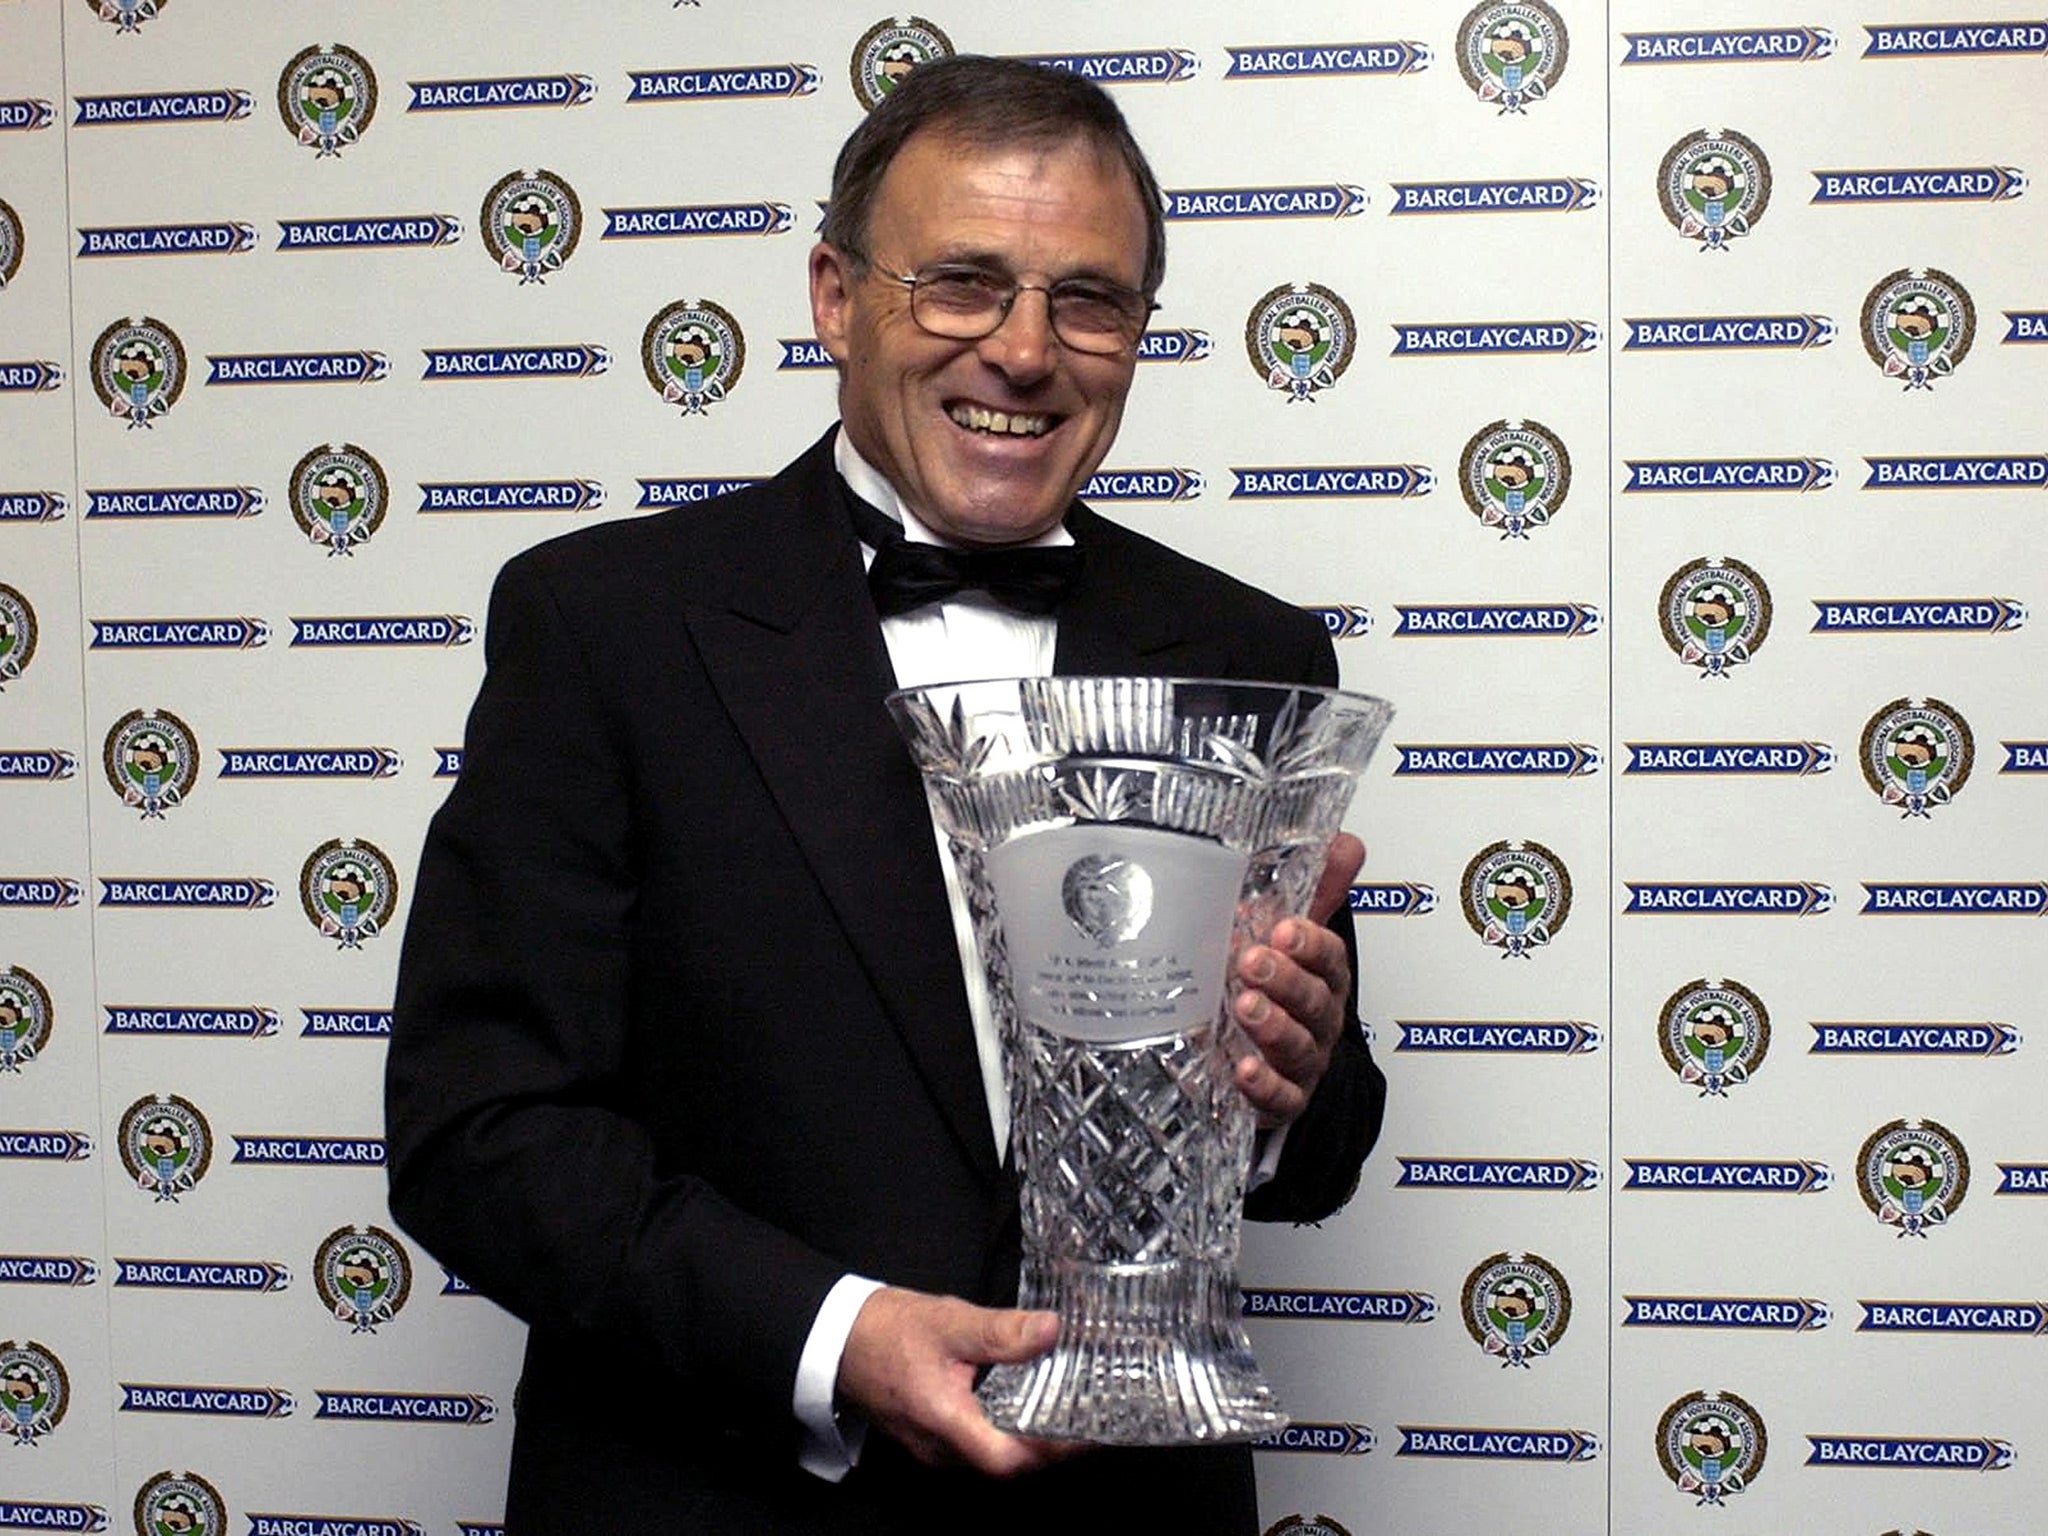 Gradi receives the Merit Award at the PFA Awards Dinner in 2004